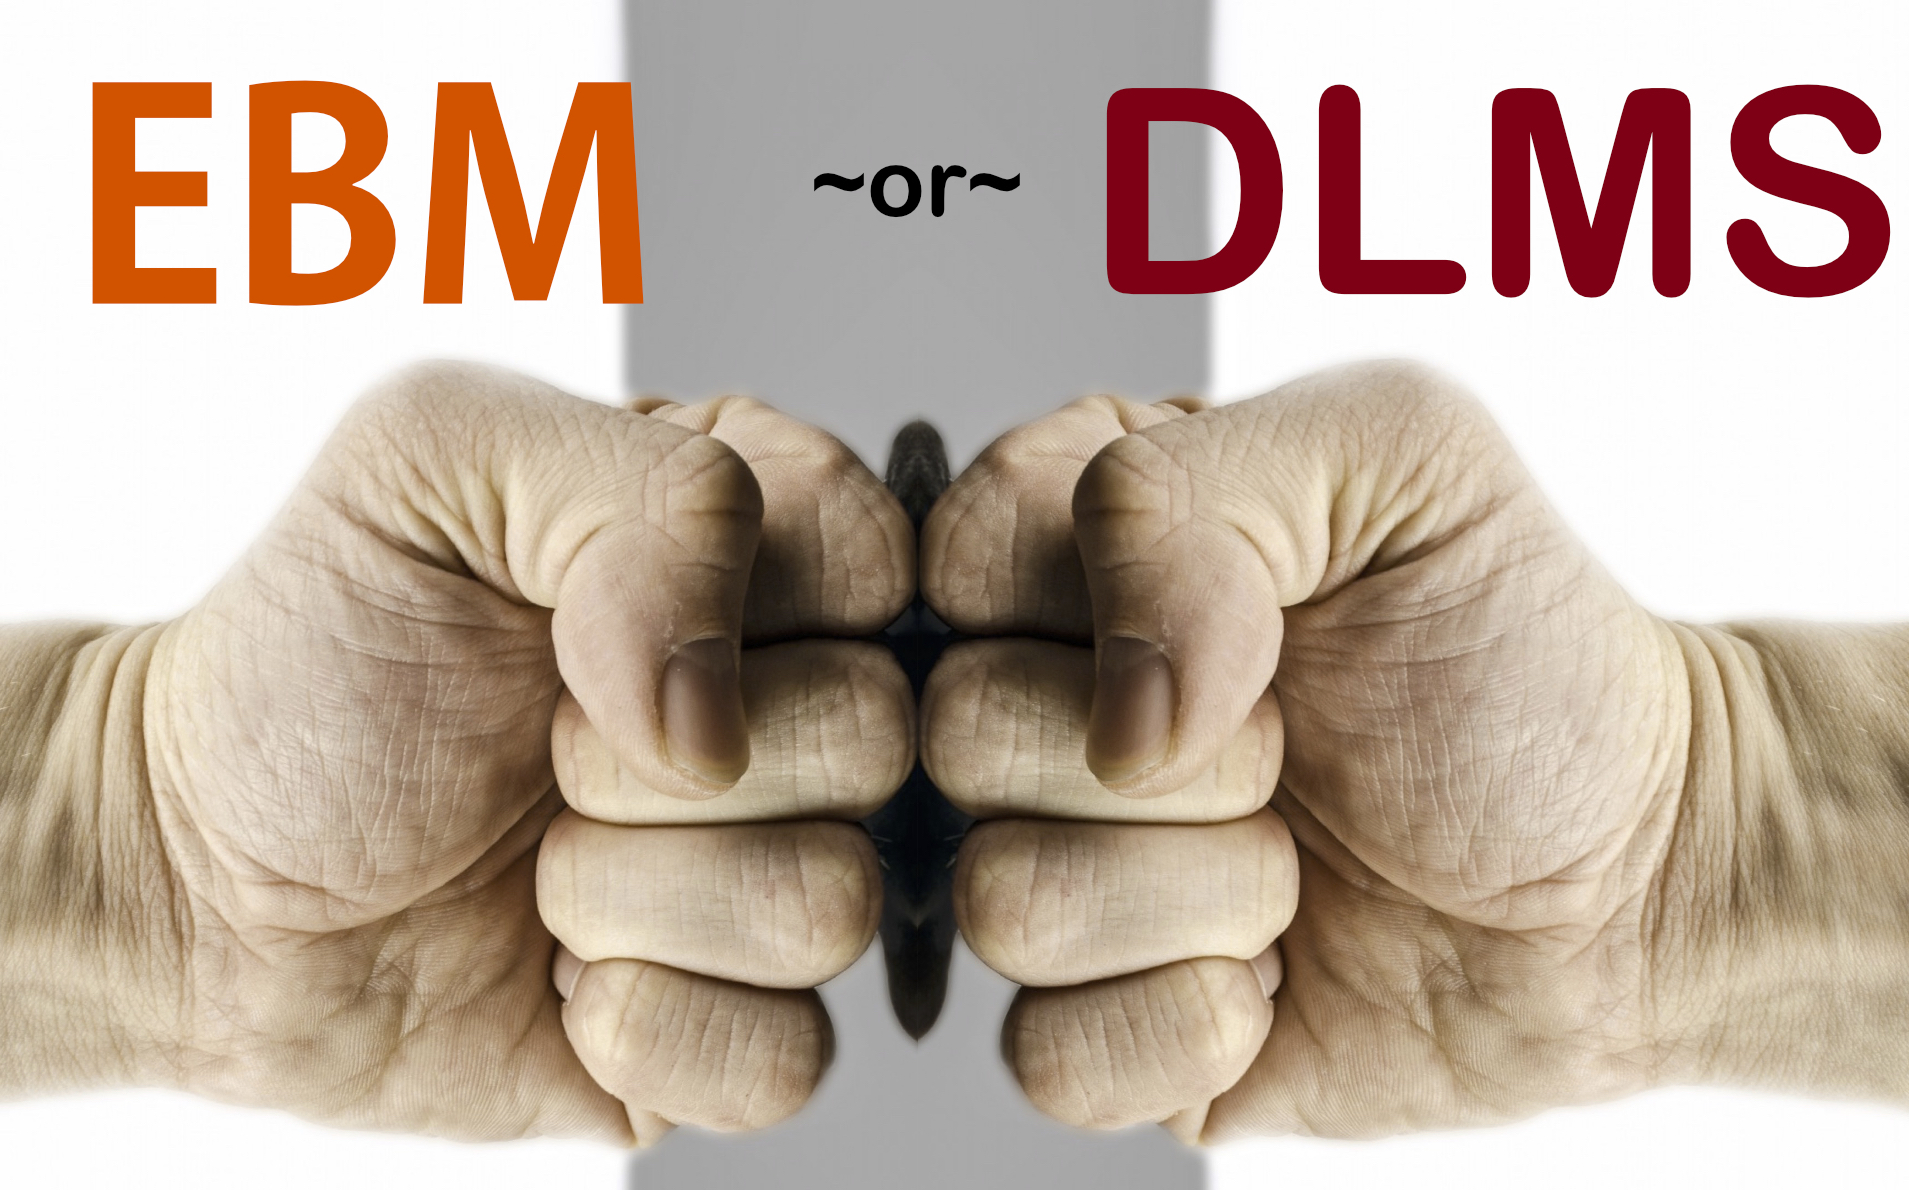  EBM or DLMS metal 3D printing comparison 